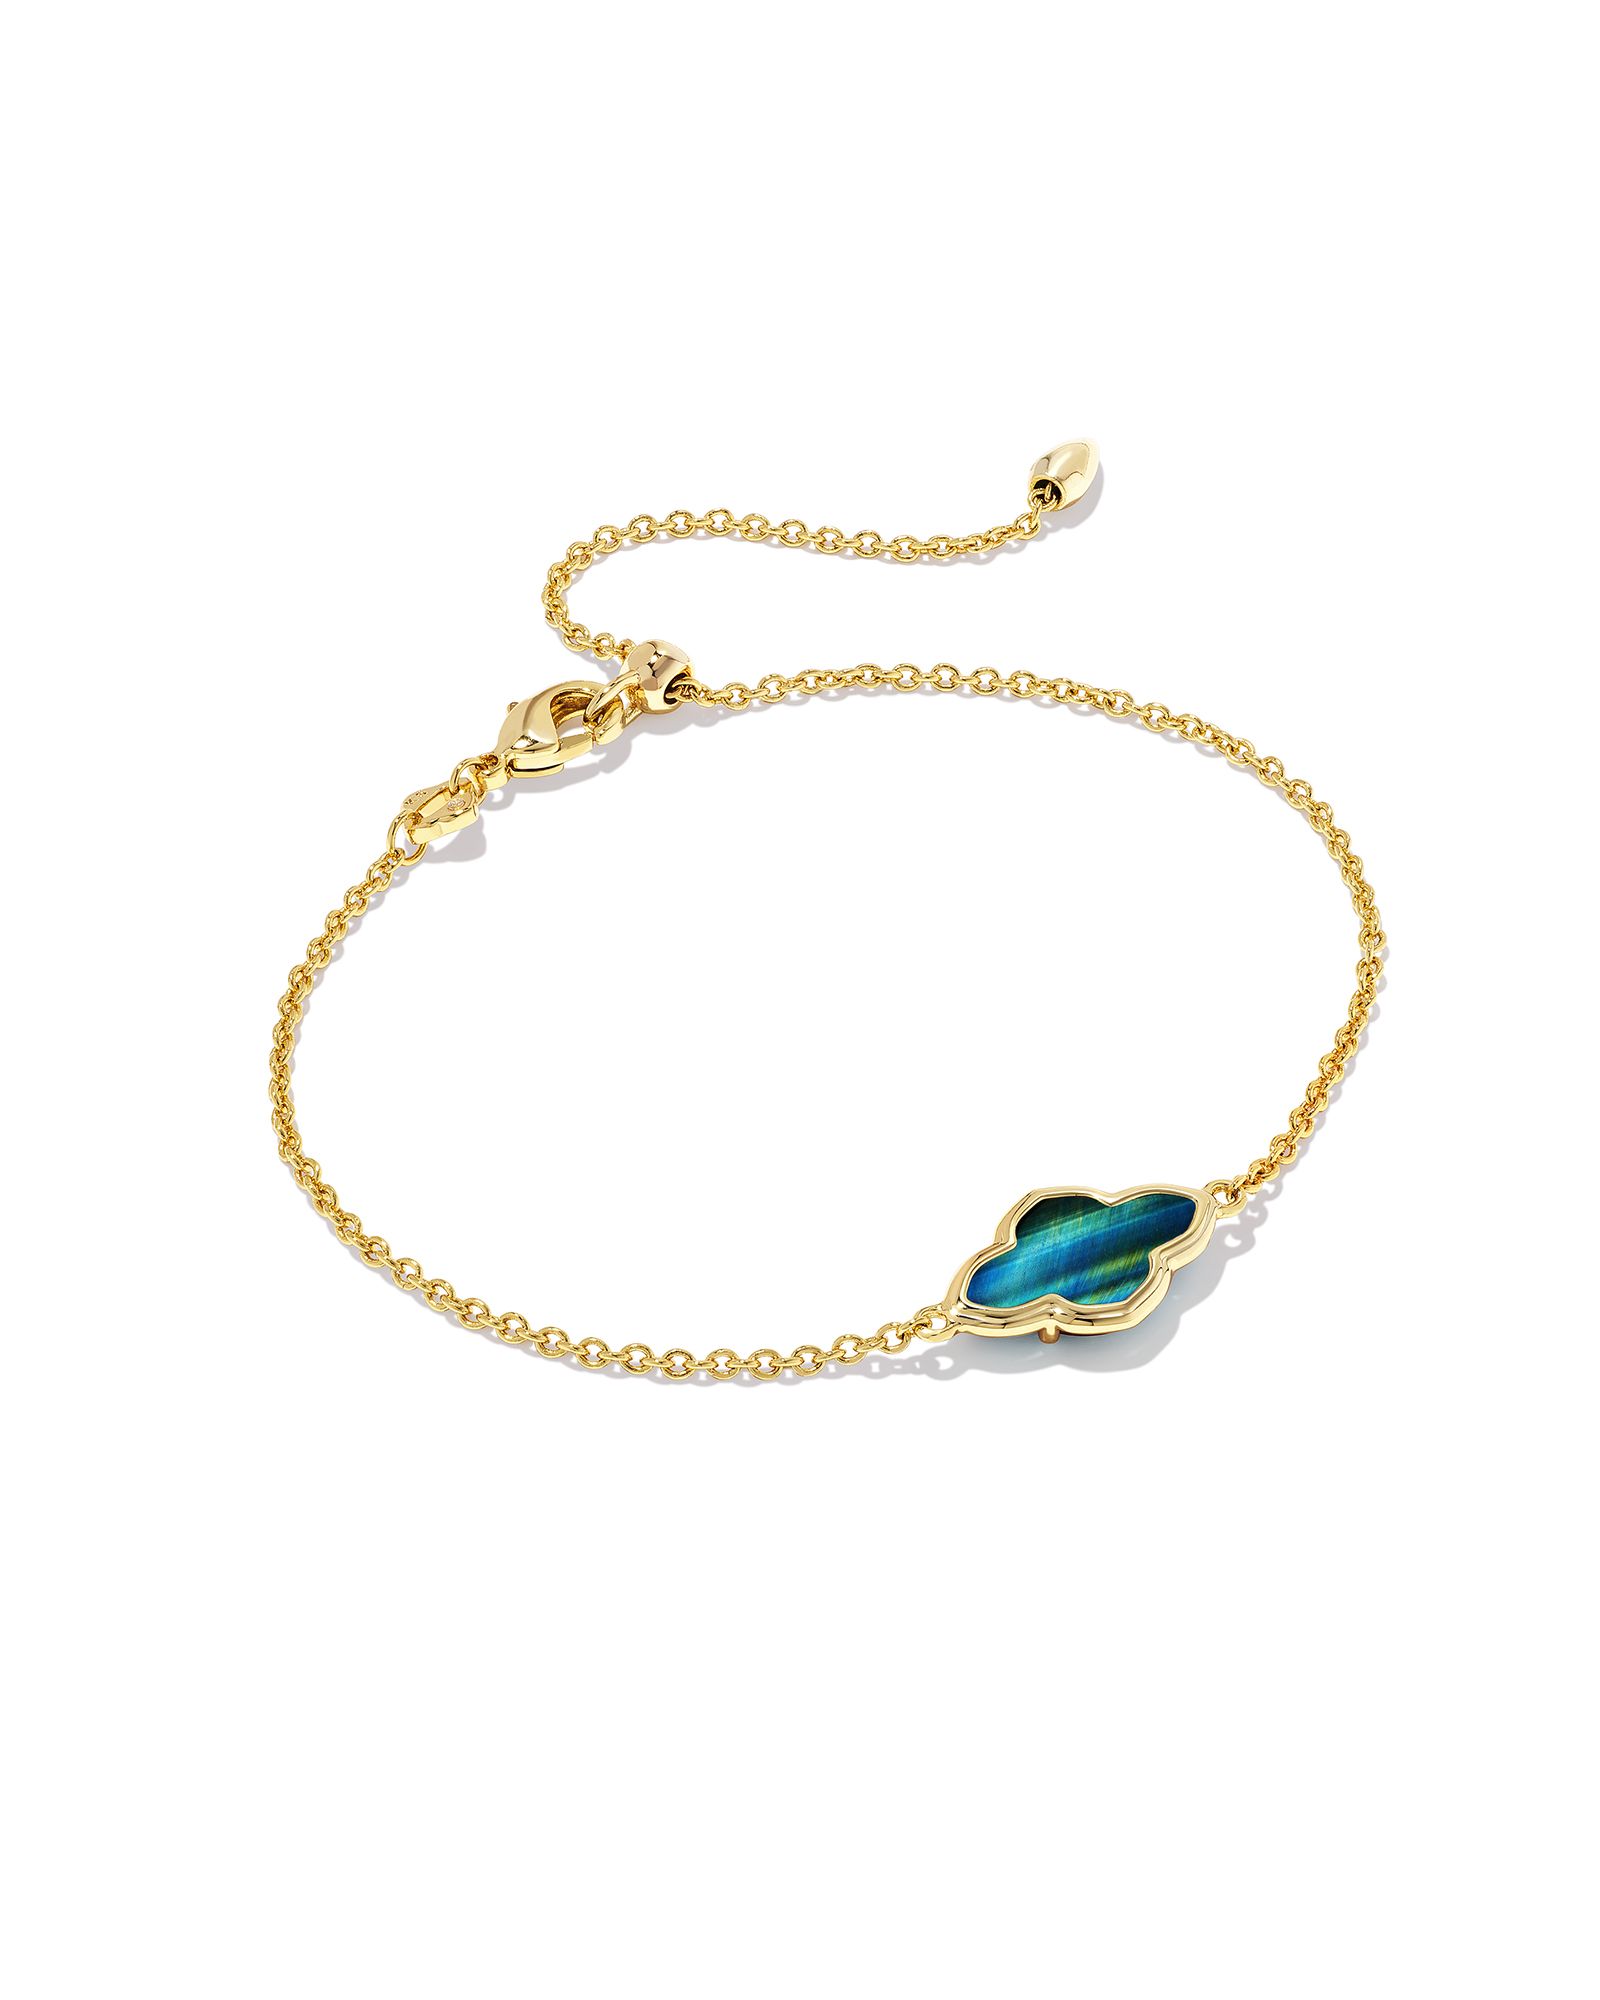 Framed Abbie Gold Delicate Chain Bracelet in Teal Tiger's Eye | Kendra Scott | Kendra Scott